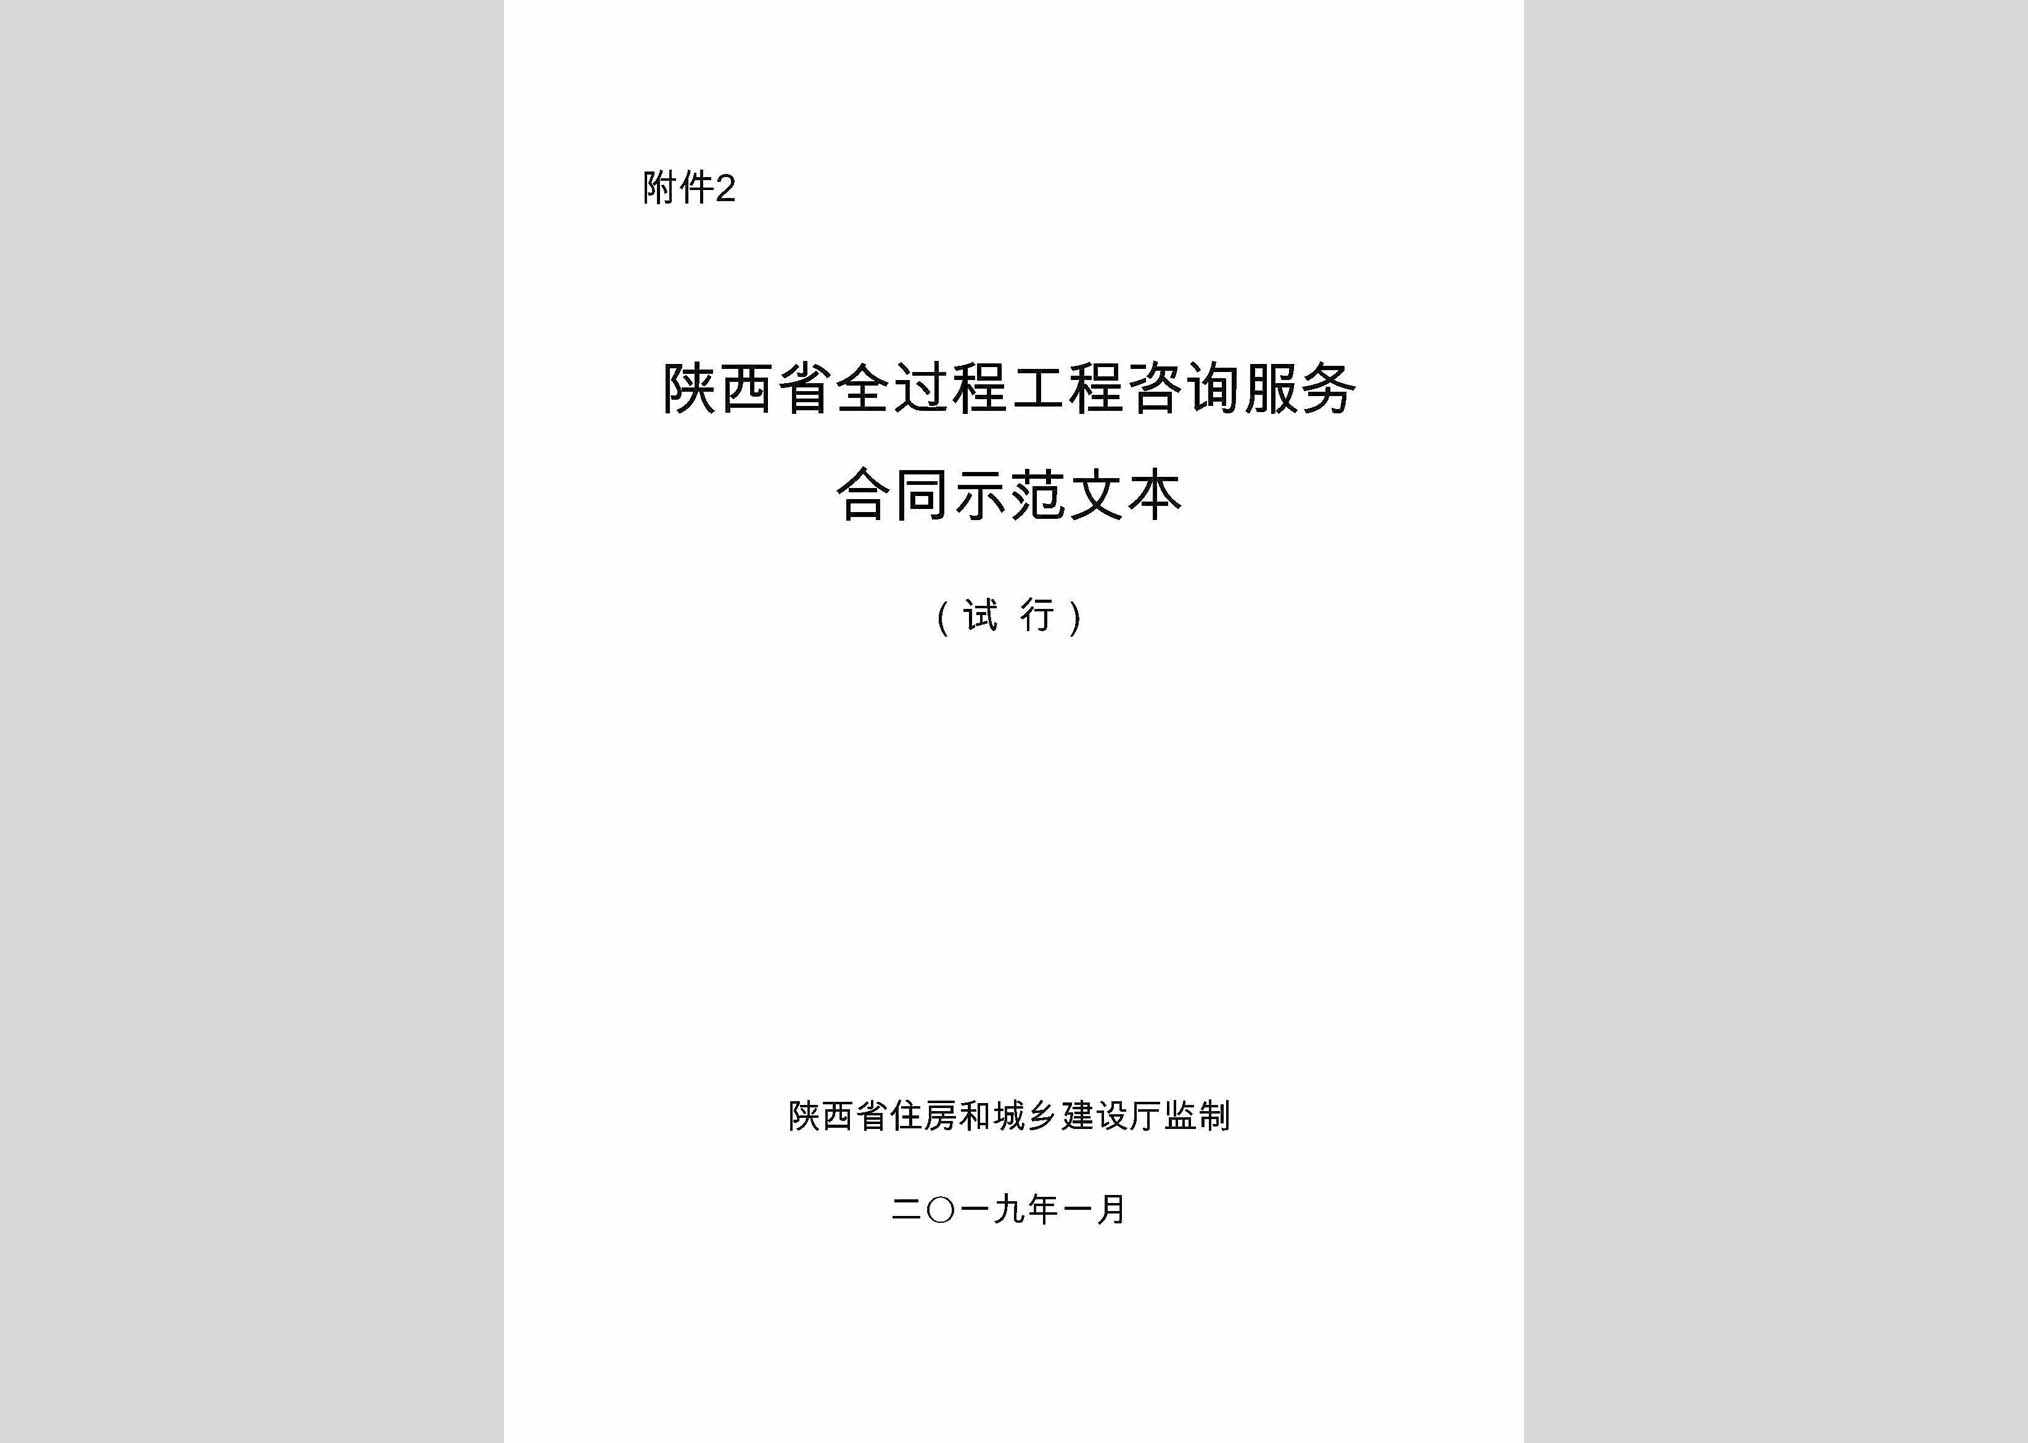 GCZXFWHT：陕西省全过程工程咨询服务合同示范文本(试行)